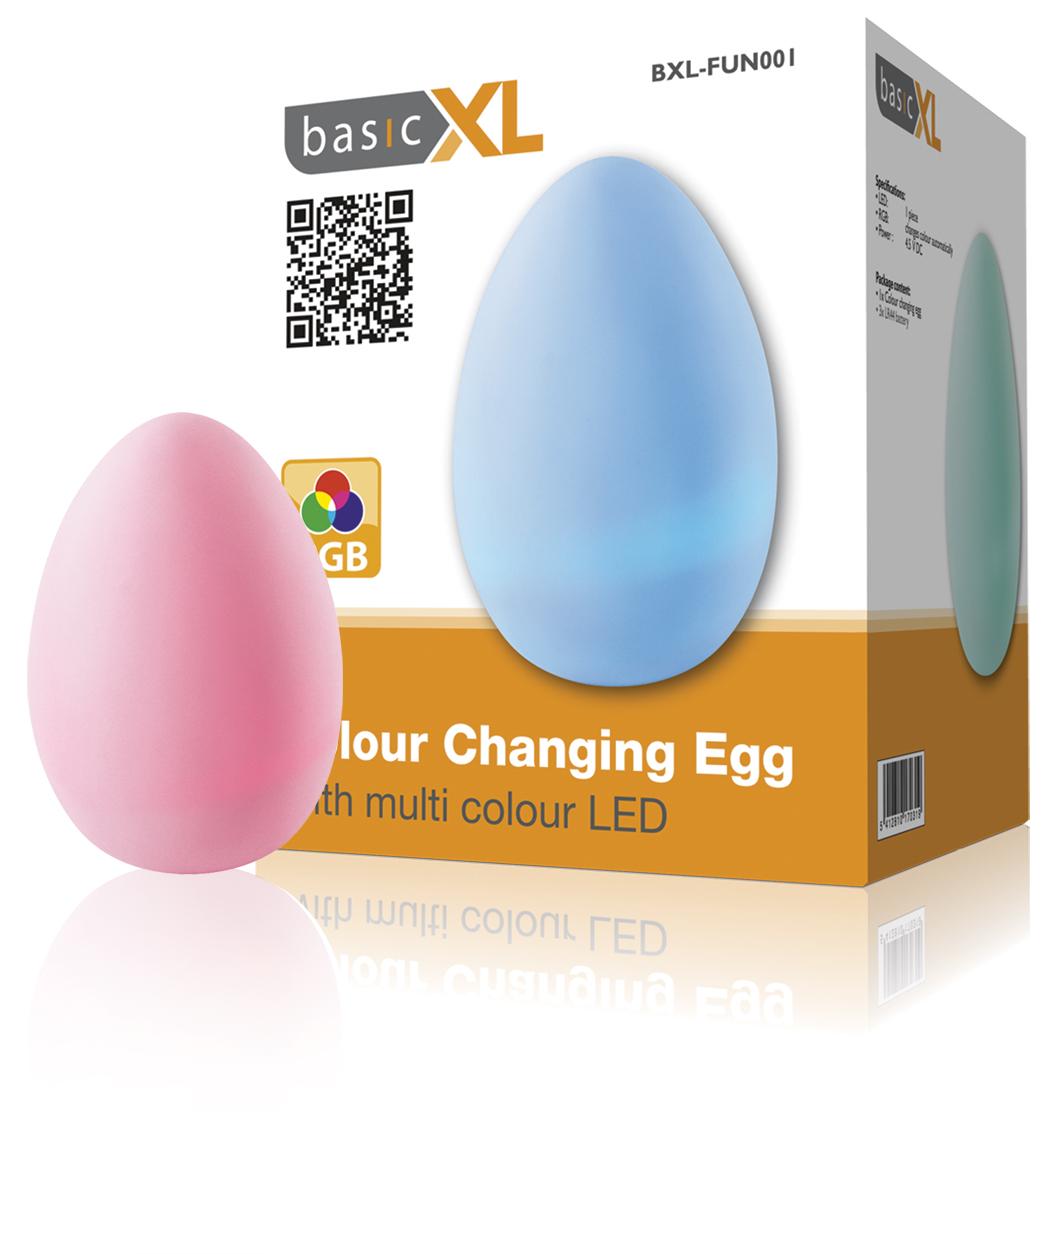 Foto basicXL Huevo con LED de colores cambiantes